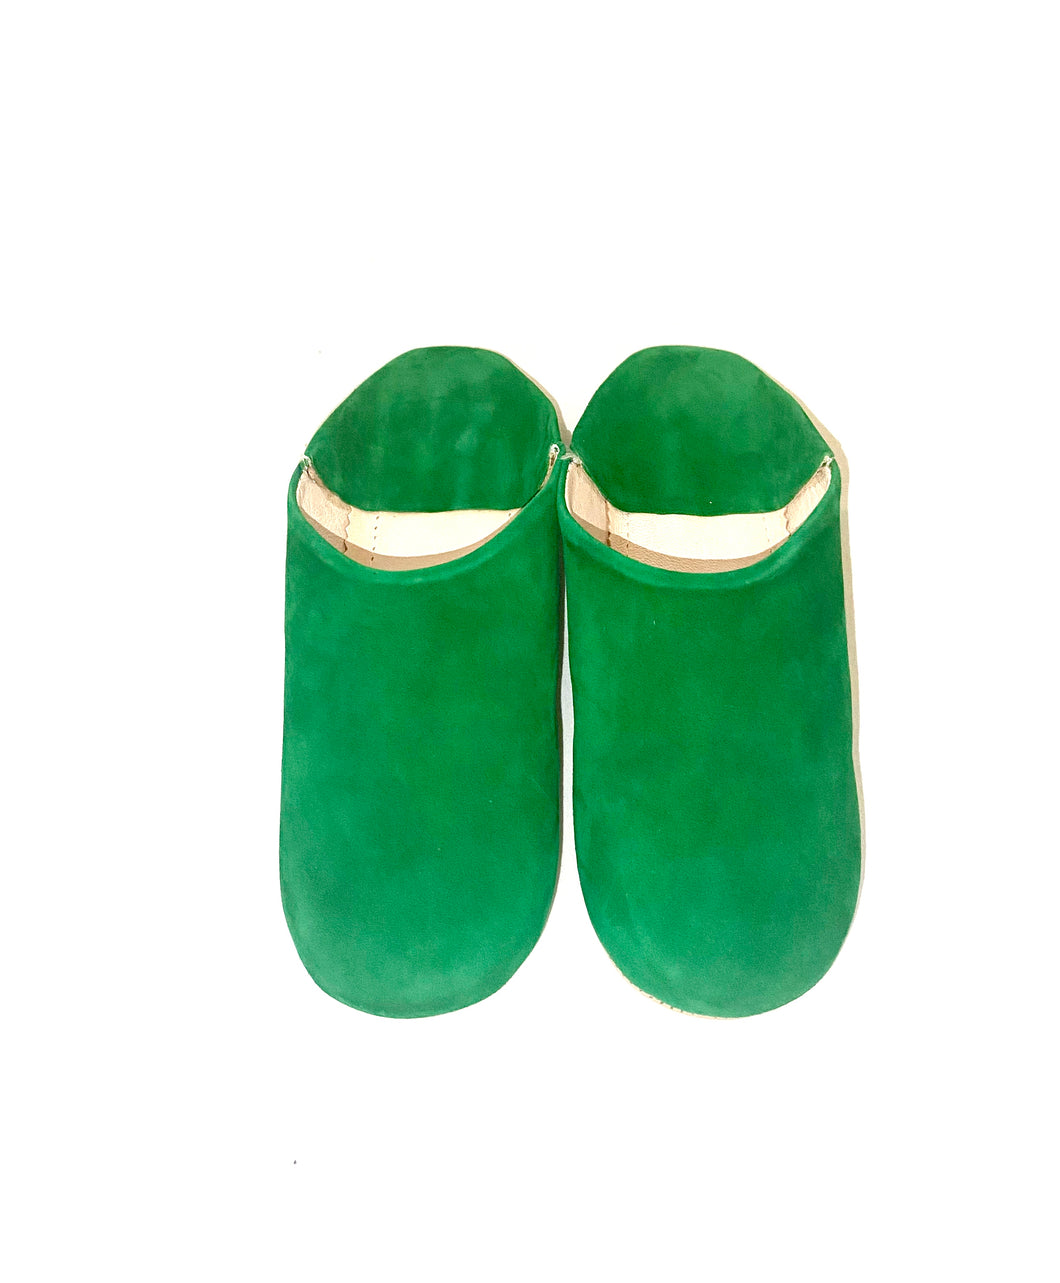 Green babouche slippers